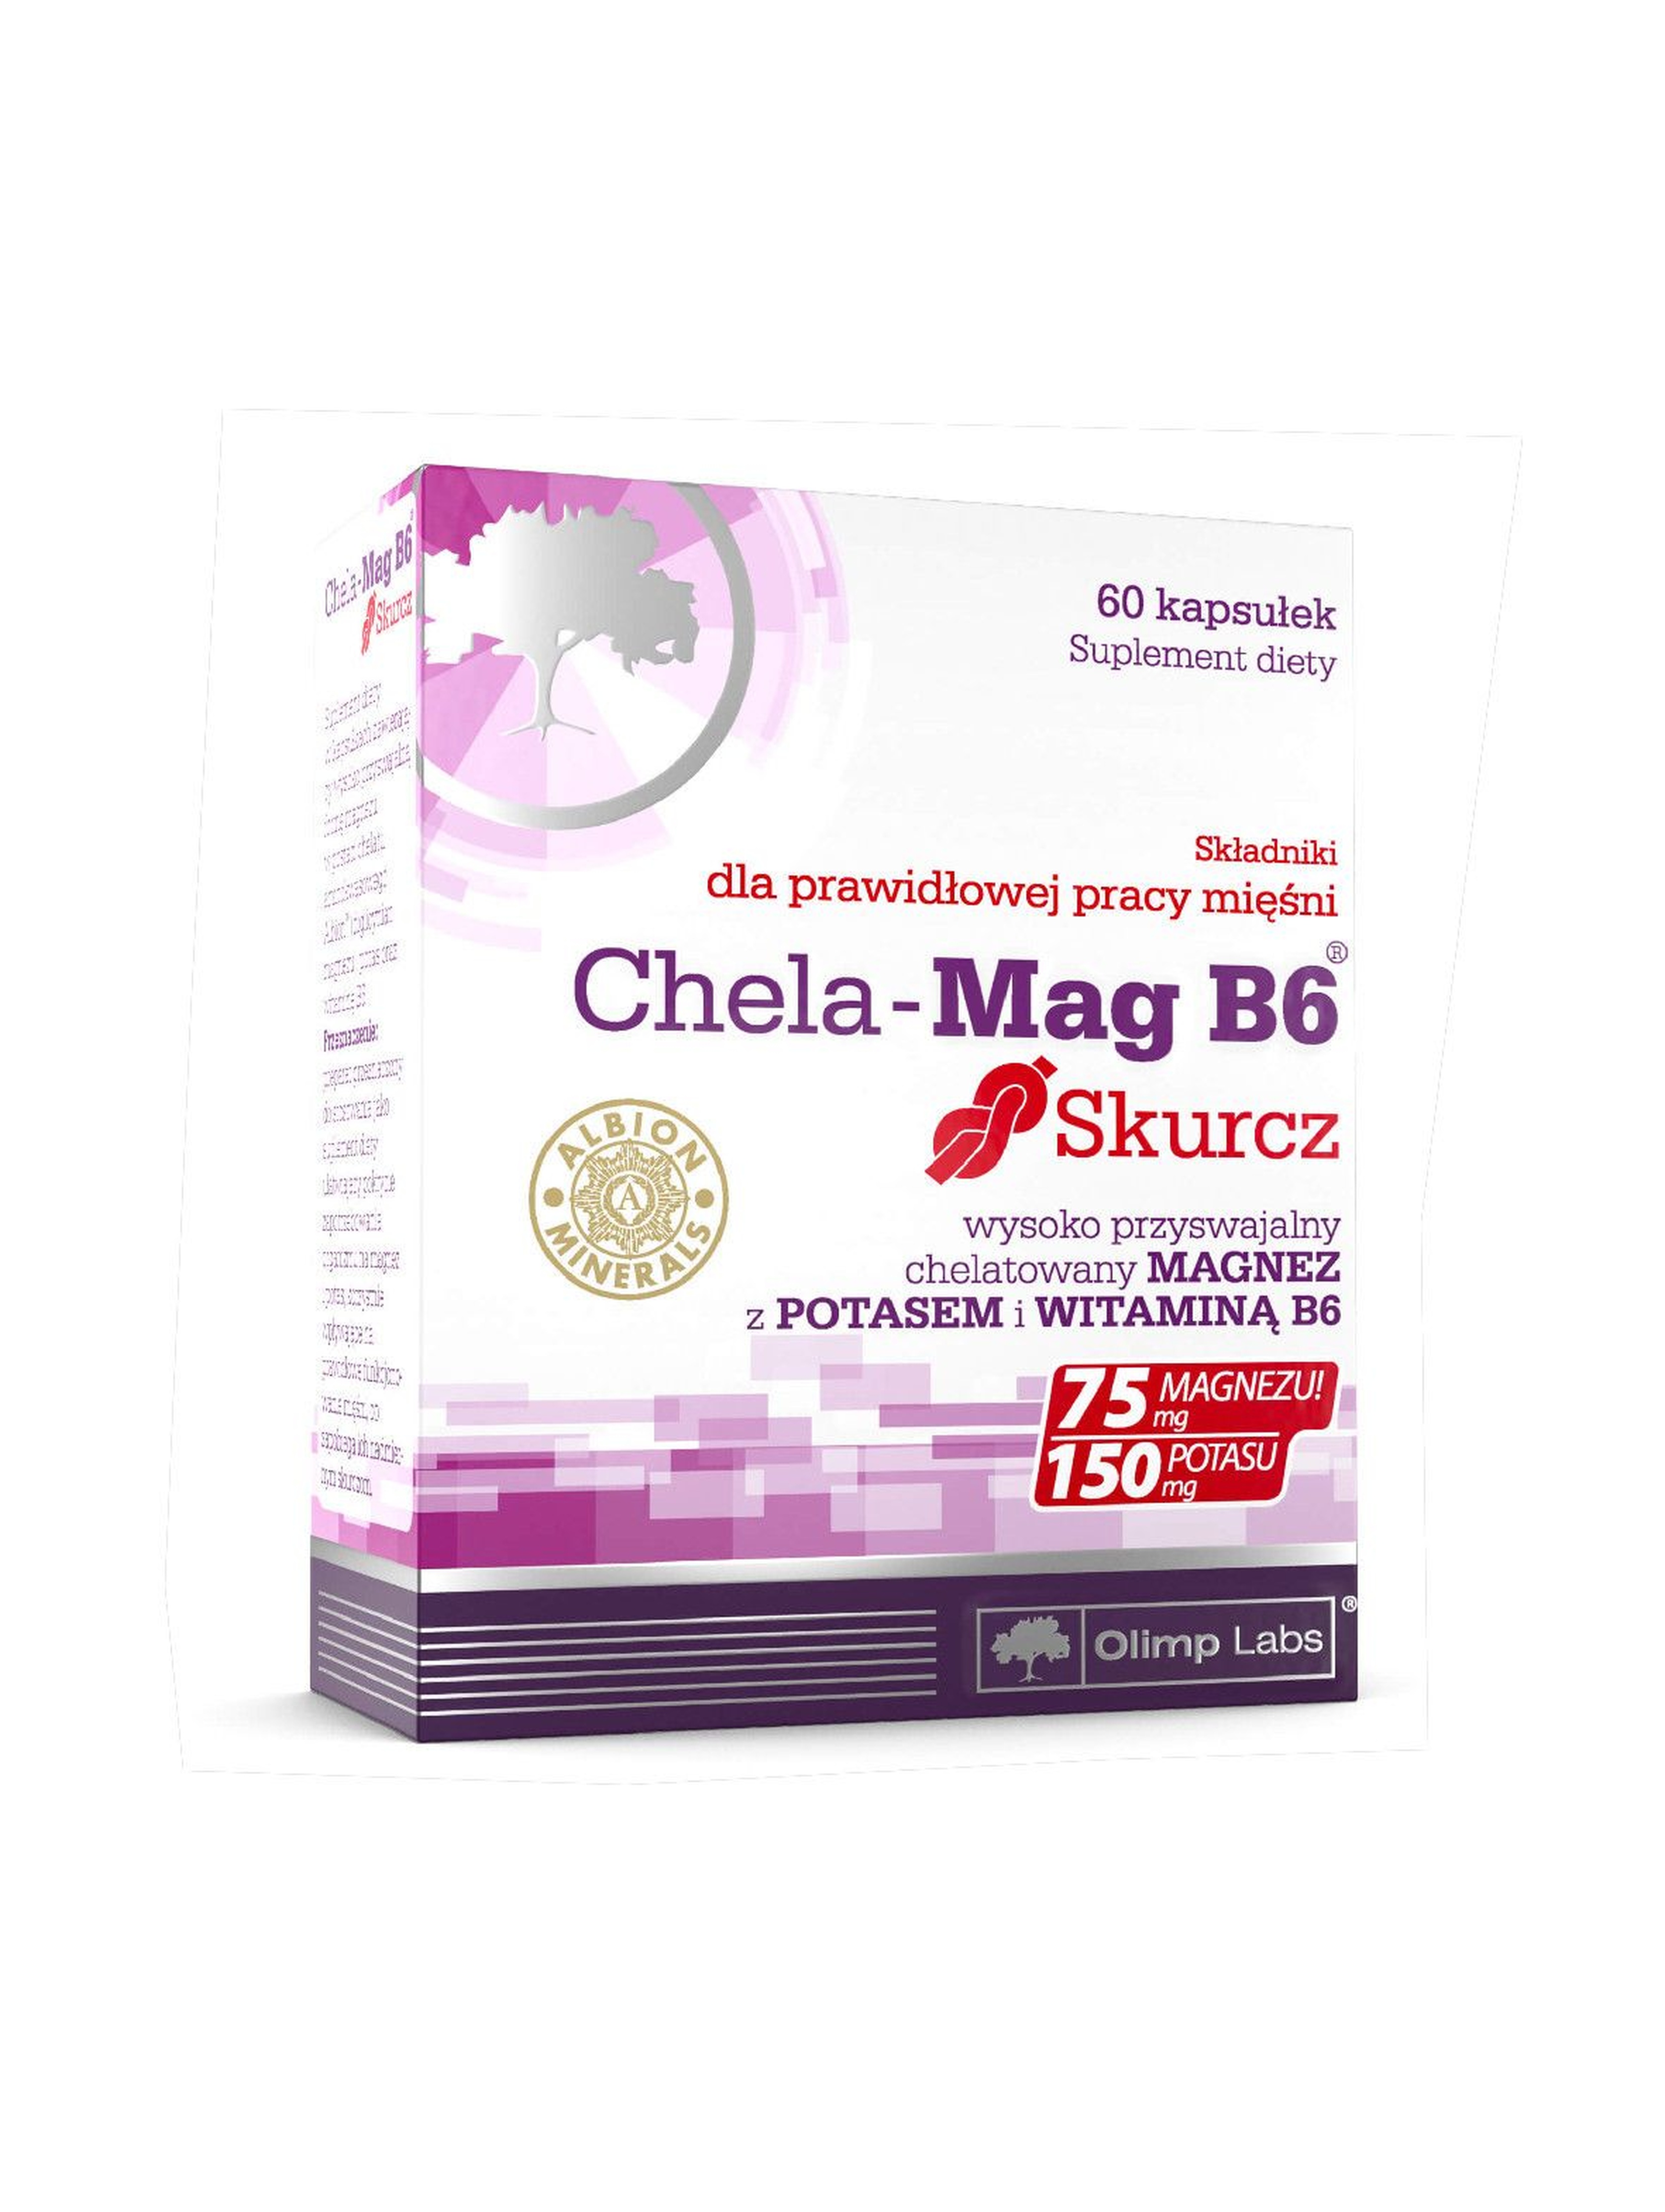 Chela-Mag B6 skurcz 60 kapsułek TOP